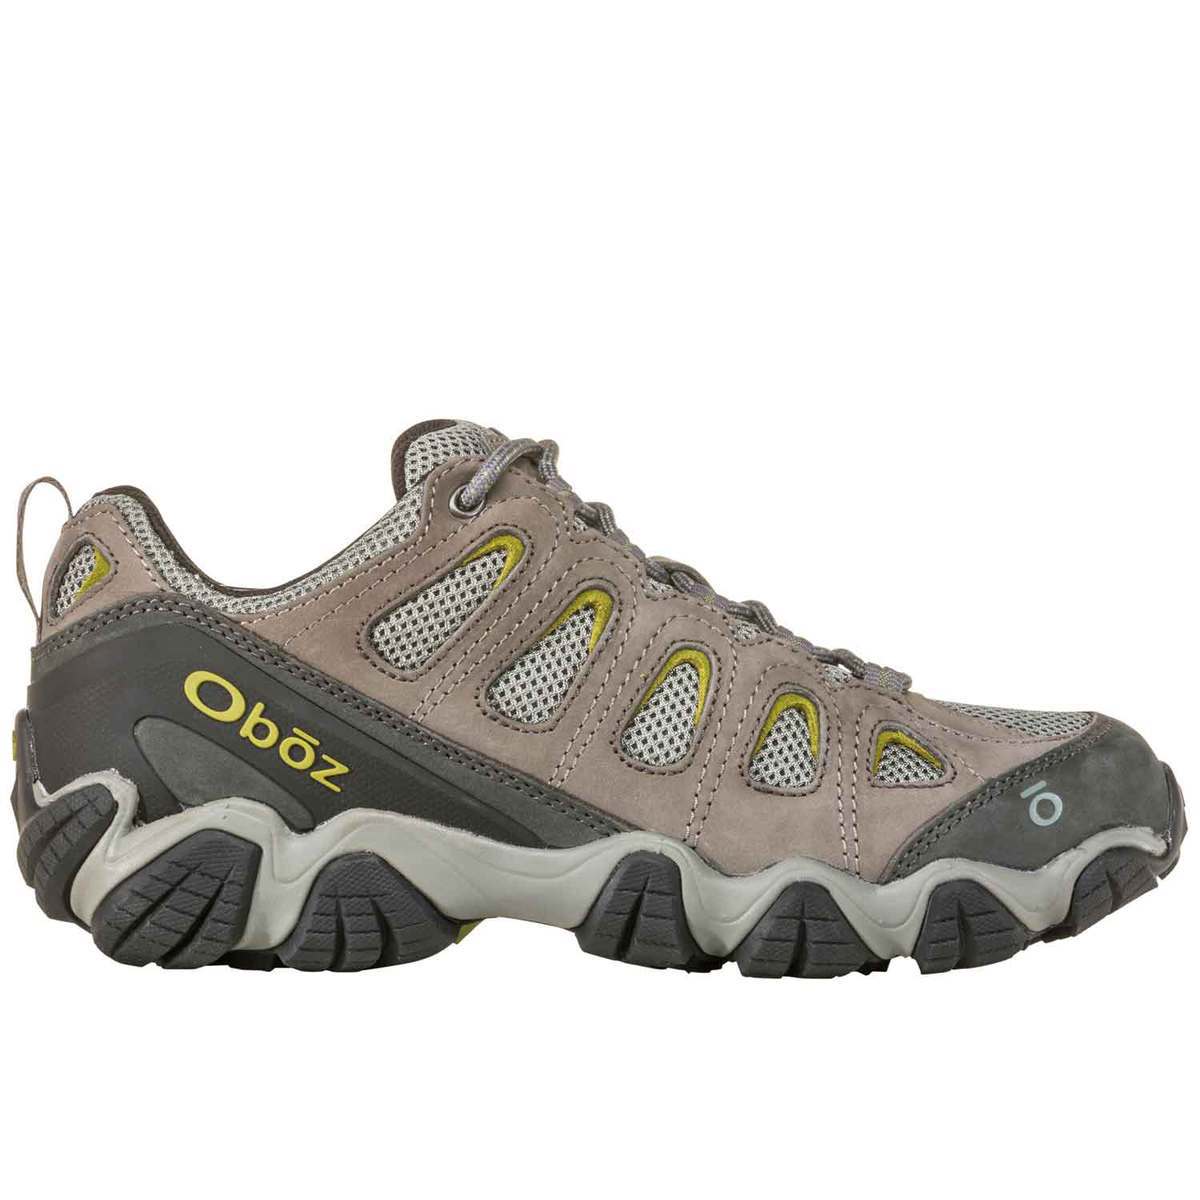 Oboz Men's Sawtooth II Low Hiking Shoes - Pewter - Size 14 - Pewter 14 ...